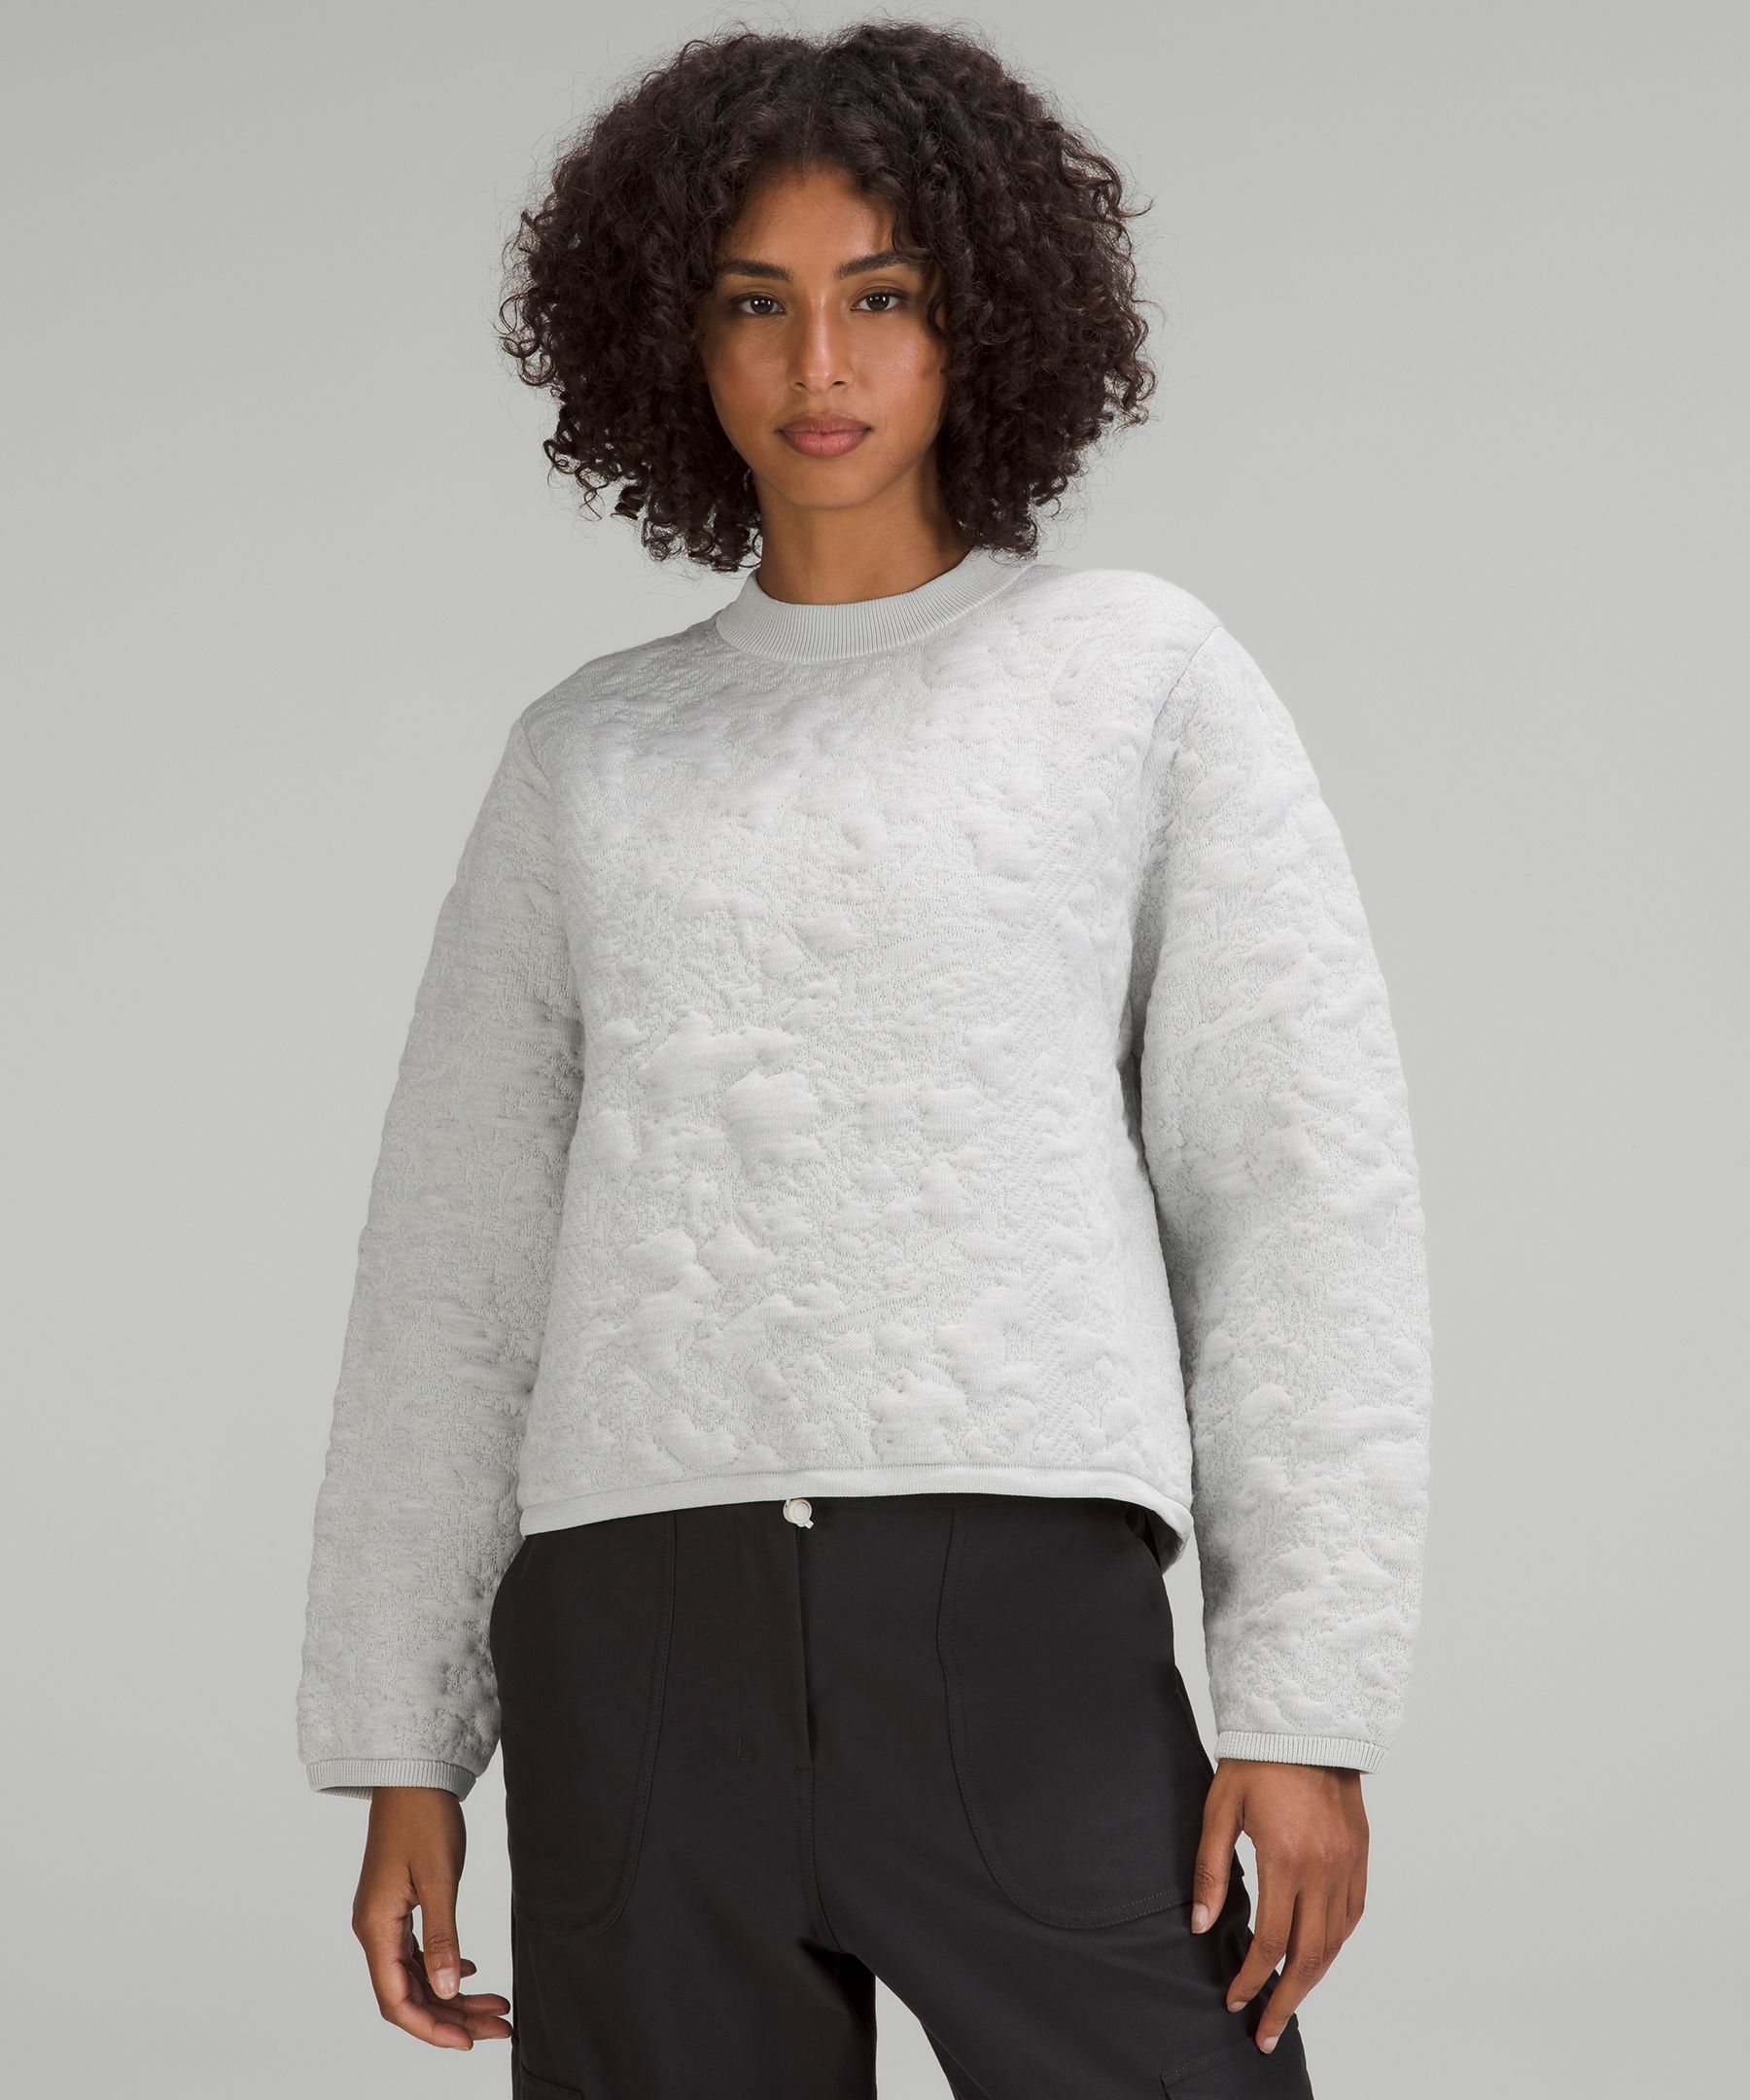 Lululemon Jacquard Multi-Texture Crewneck Sweater